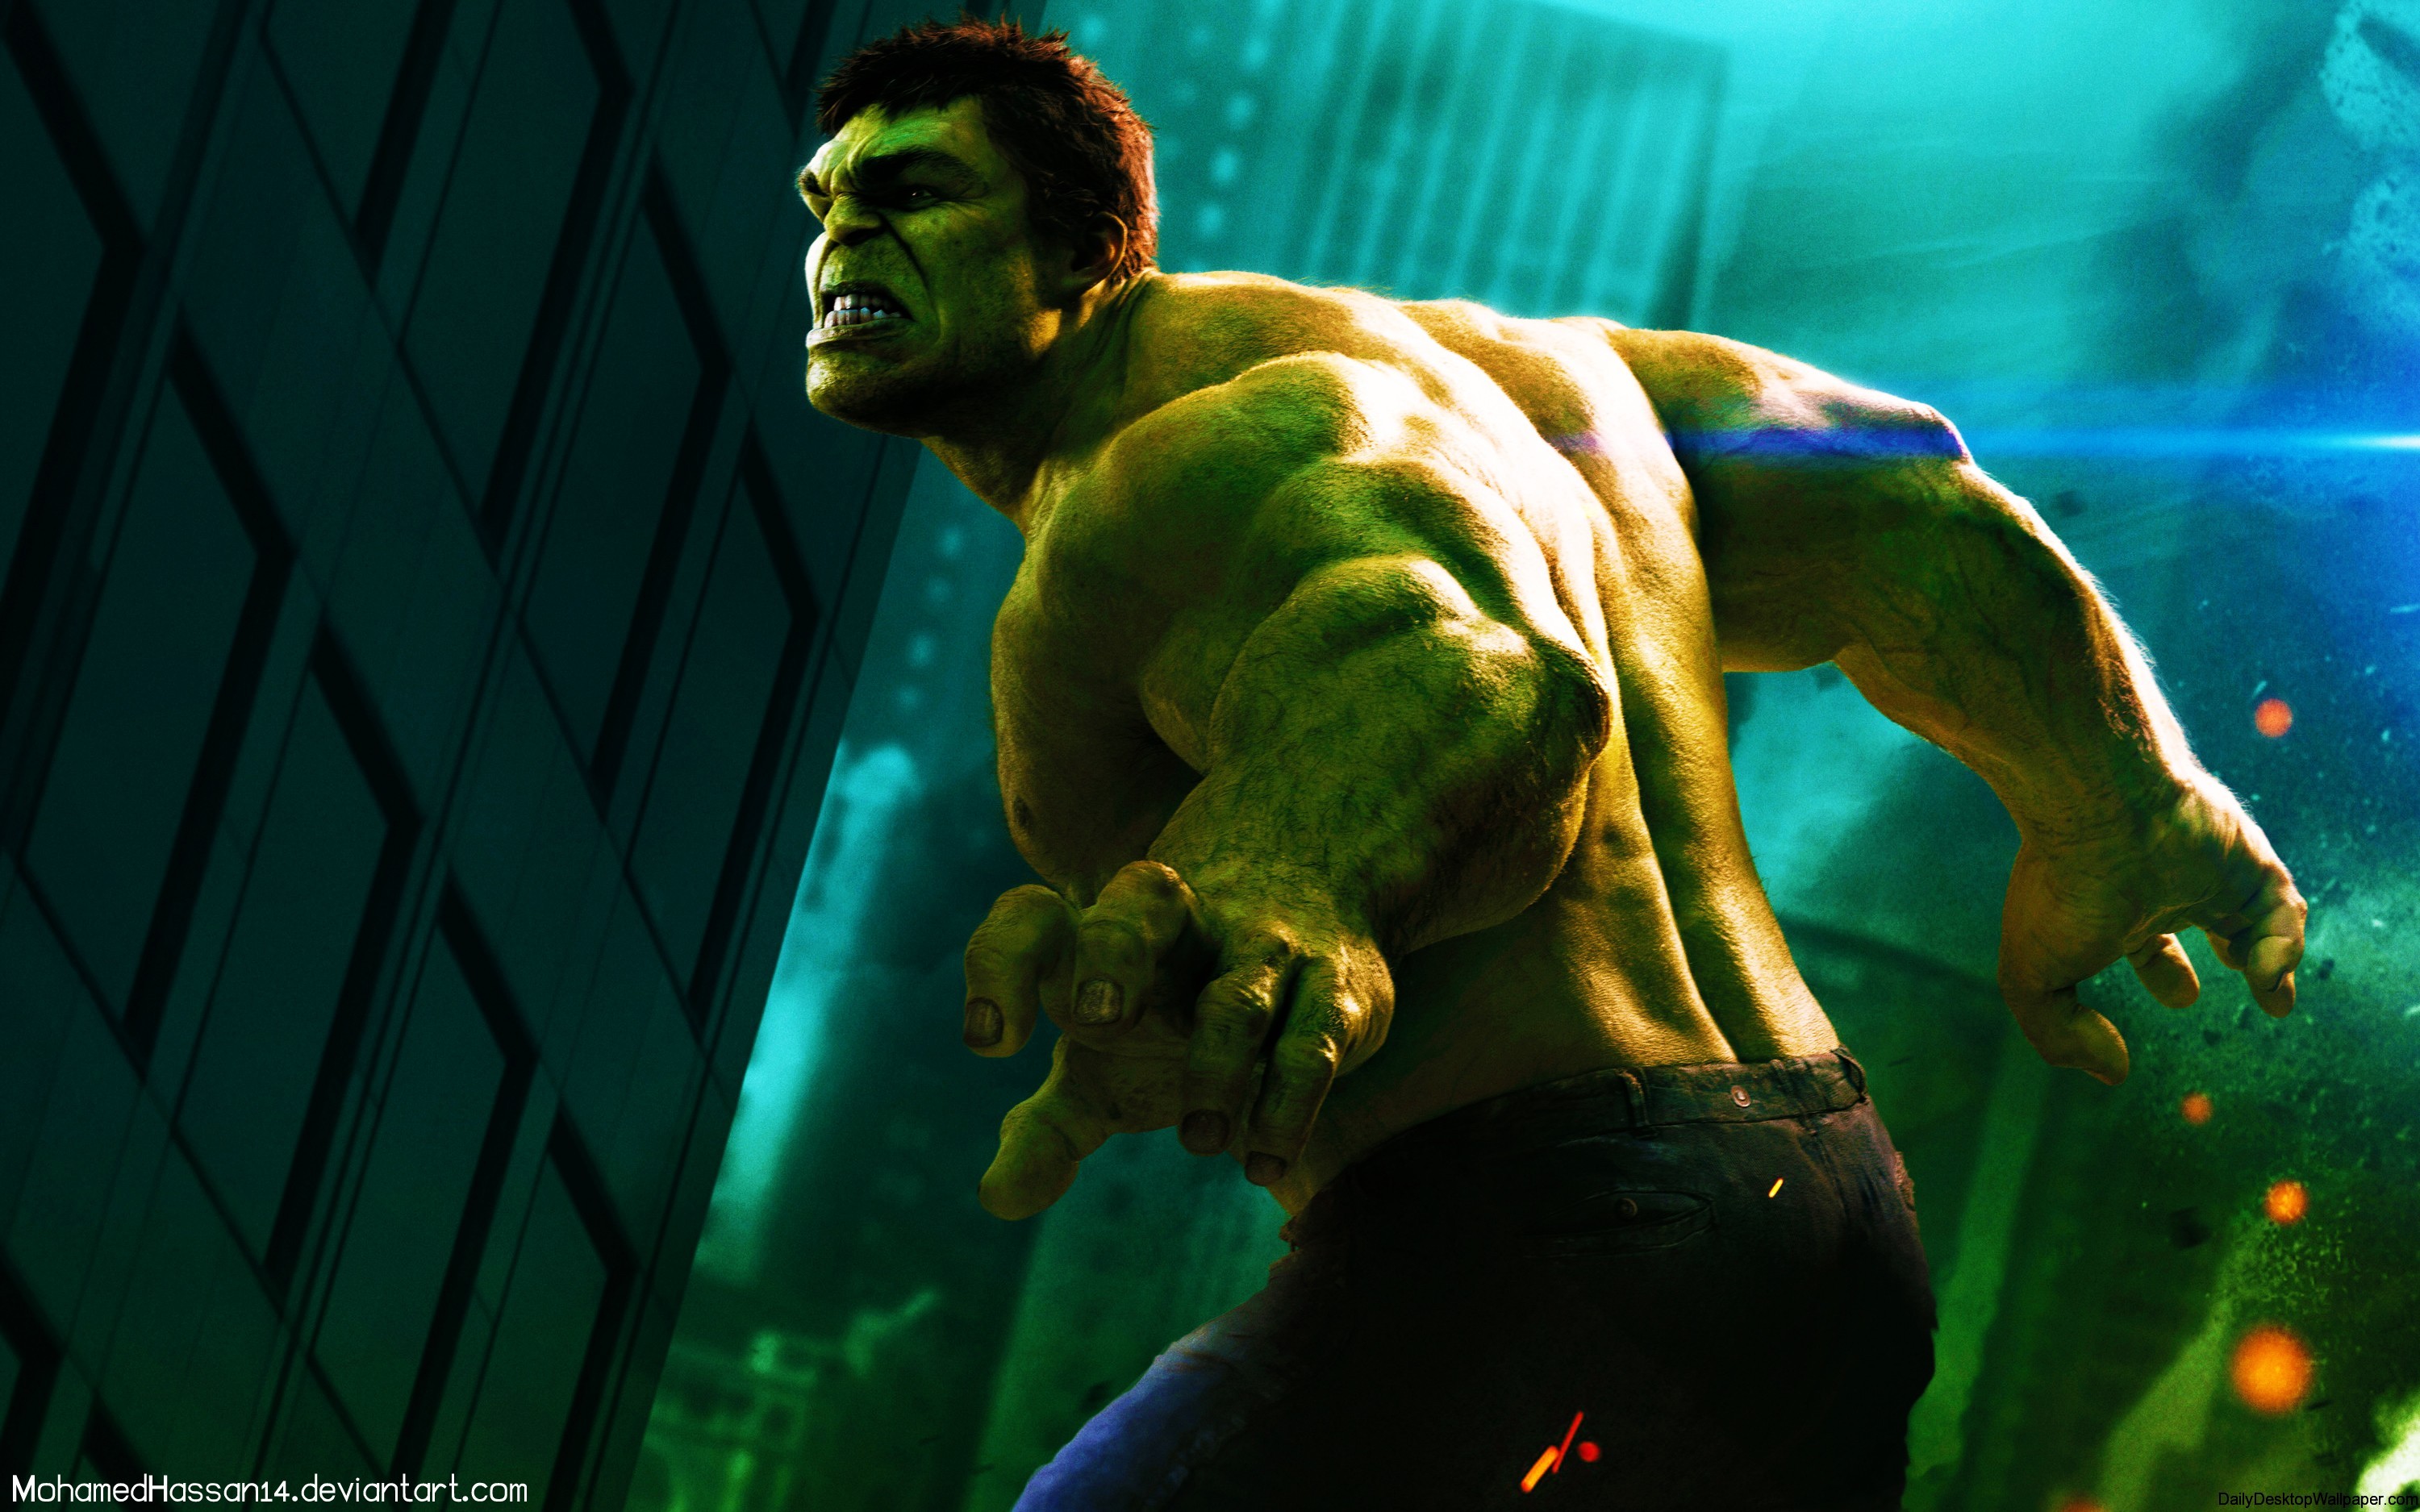 The Hulk - High Definition, High Resolution HD Wallpapers : High  Definition, High Resolution HD Wallpapers